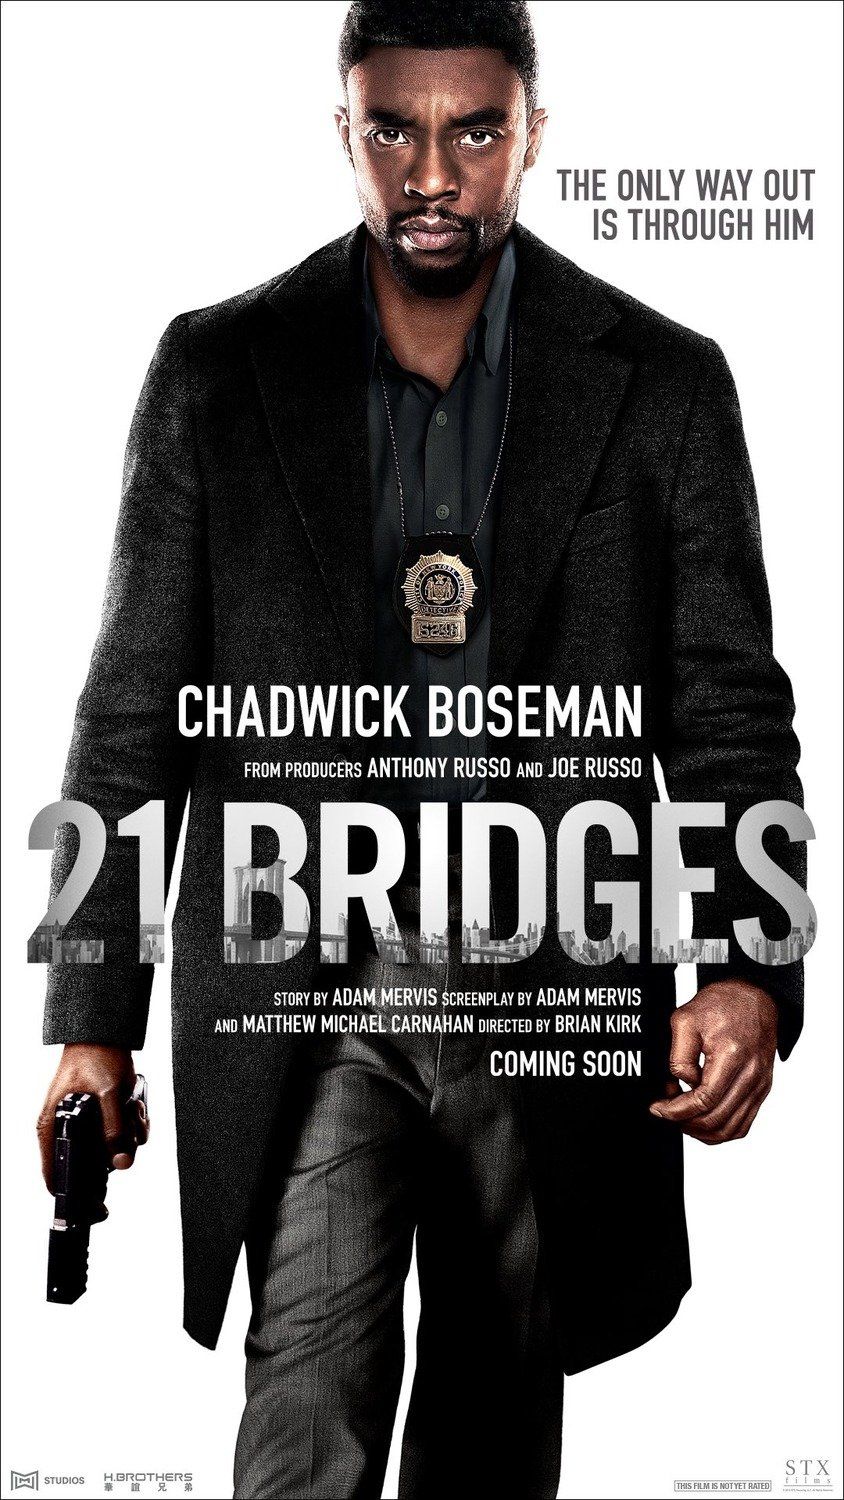 Second poster for '21 Bridges' highlighting dynamic action captured by Ferdi Fischer using WarpCam® technology.